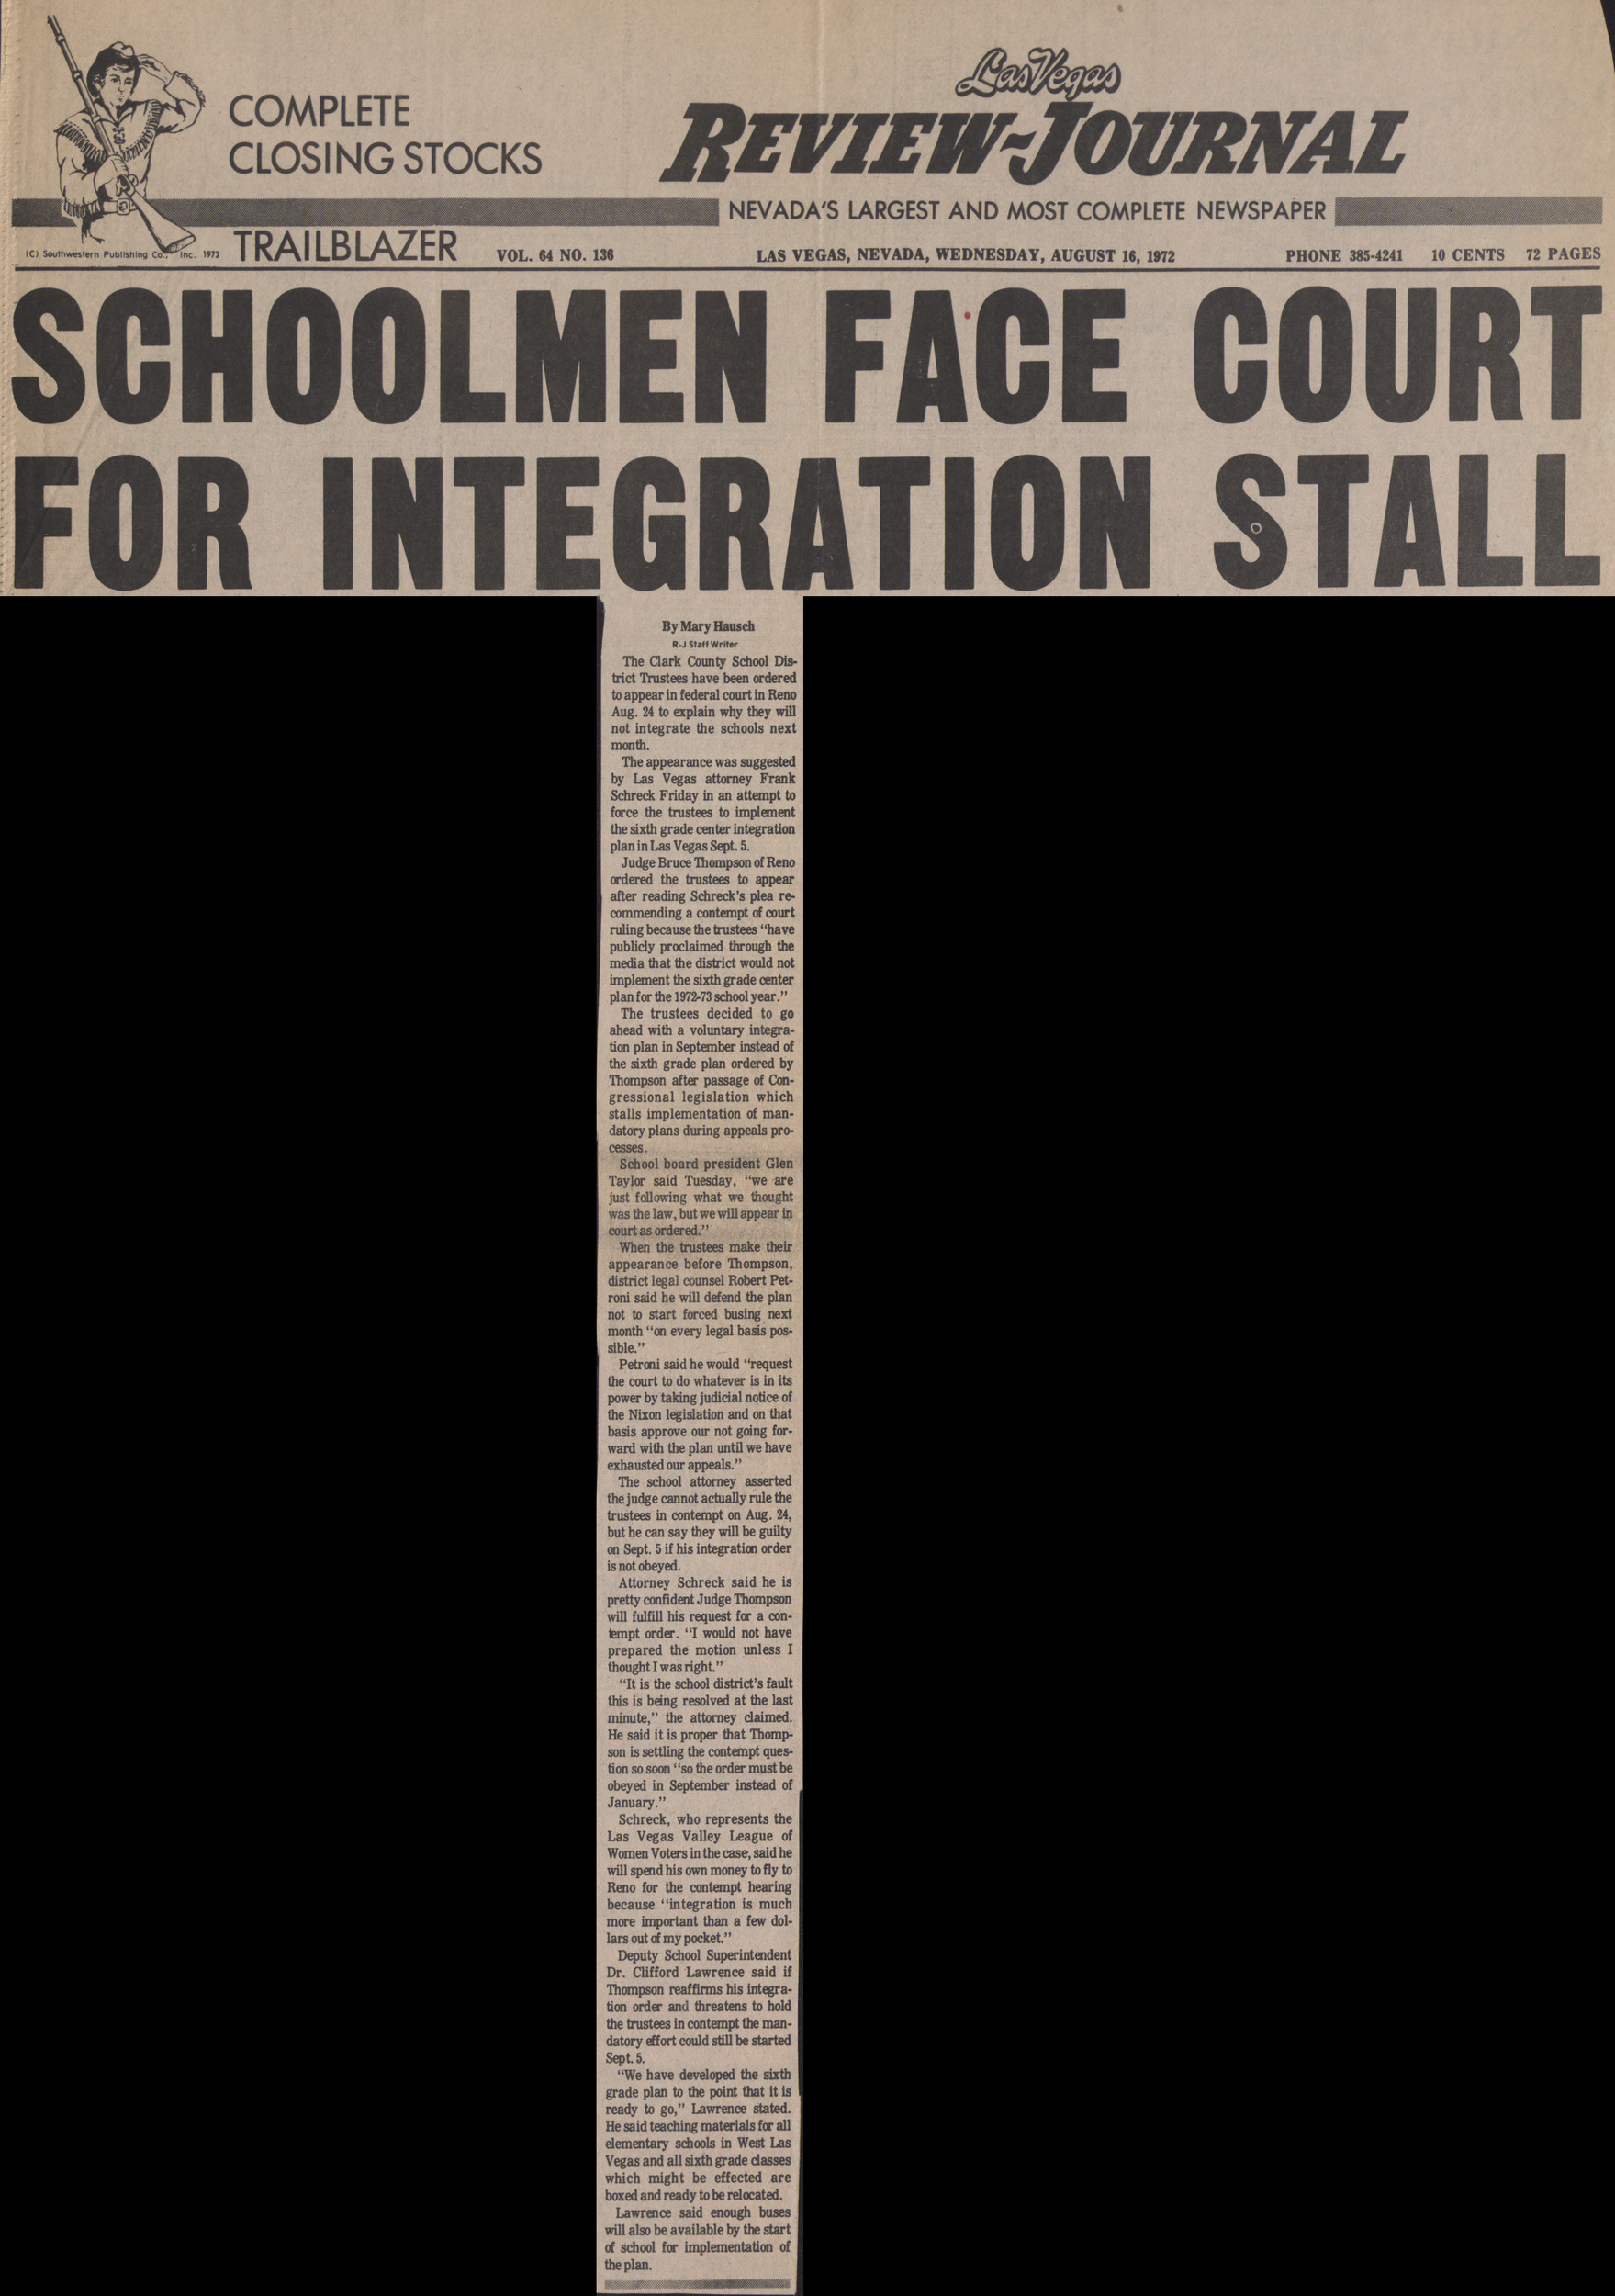 Newspaper clipping, SCHOOLMEN FACE COURT FOR INTEGRATION STALL, Las Vegas Review-Journal, August 16, 1972